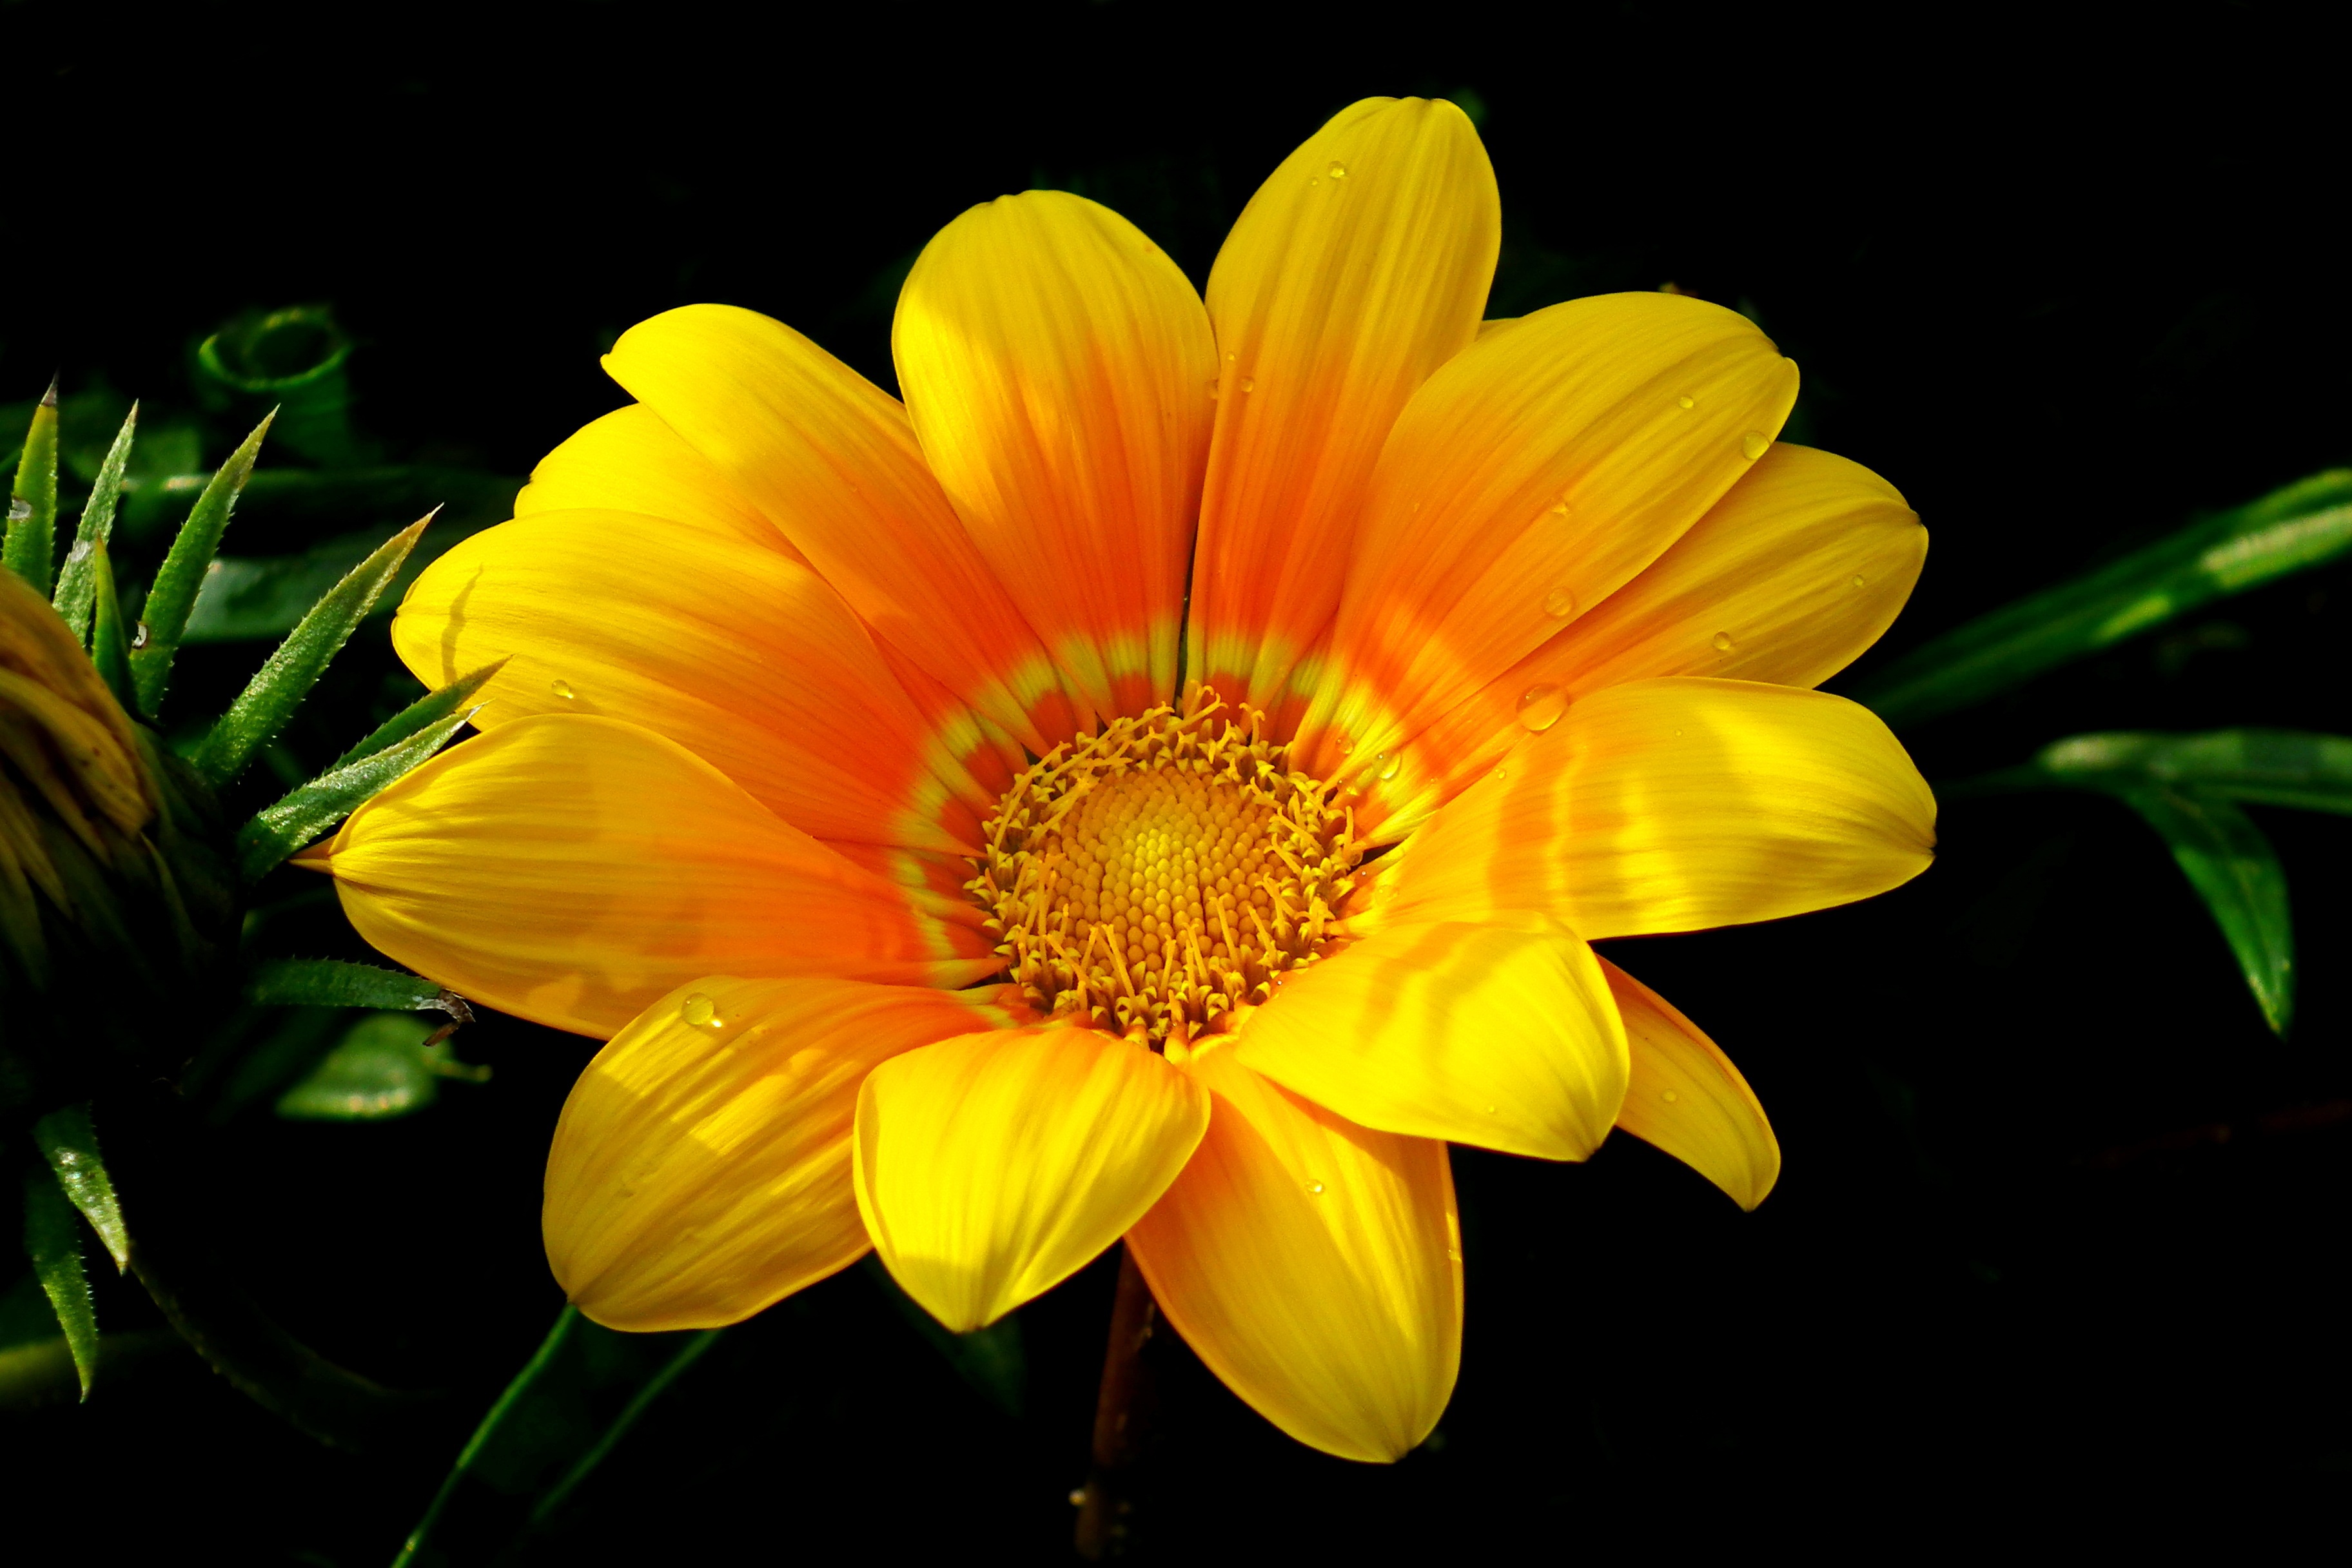 473131 descargar imagen tierra/naturaleza, gazania, flor, flor amarilla, flores: fondos de pantalla y protectores de pantalla gratis